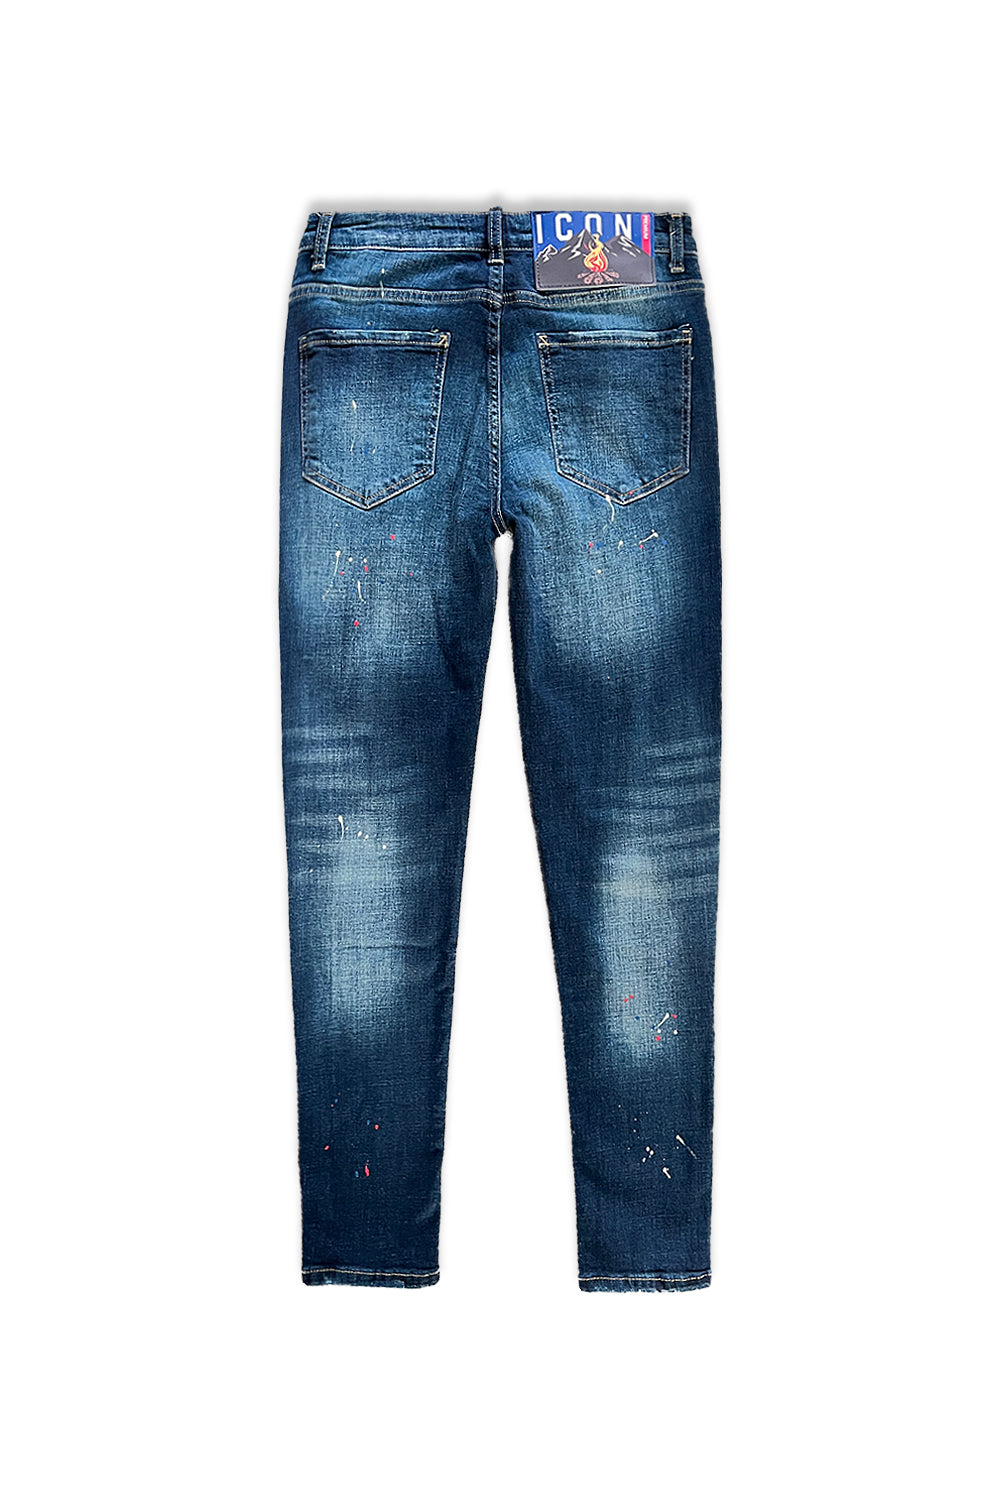 ICON Premium Jeans Skinny Fit